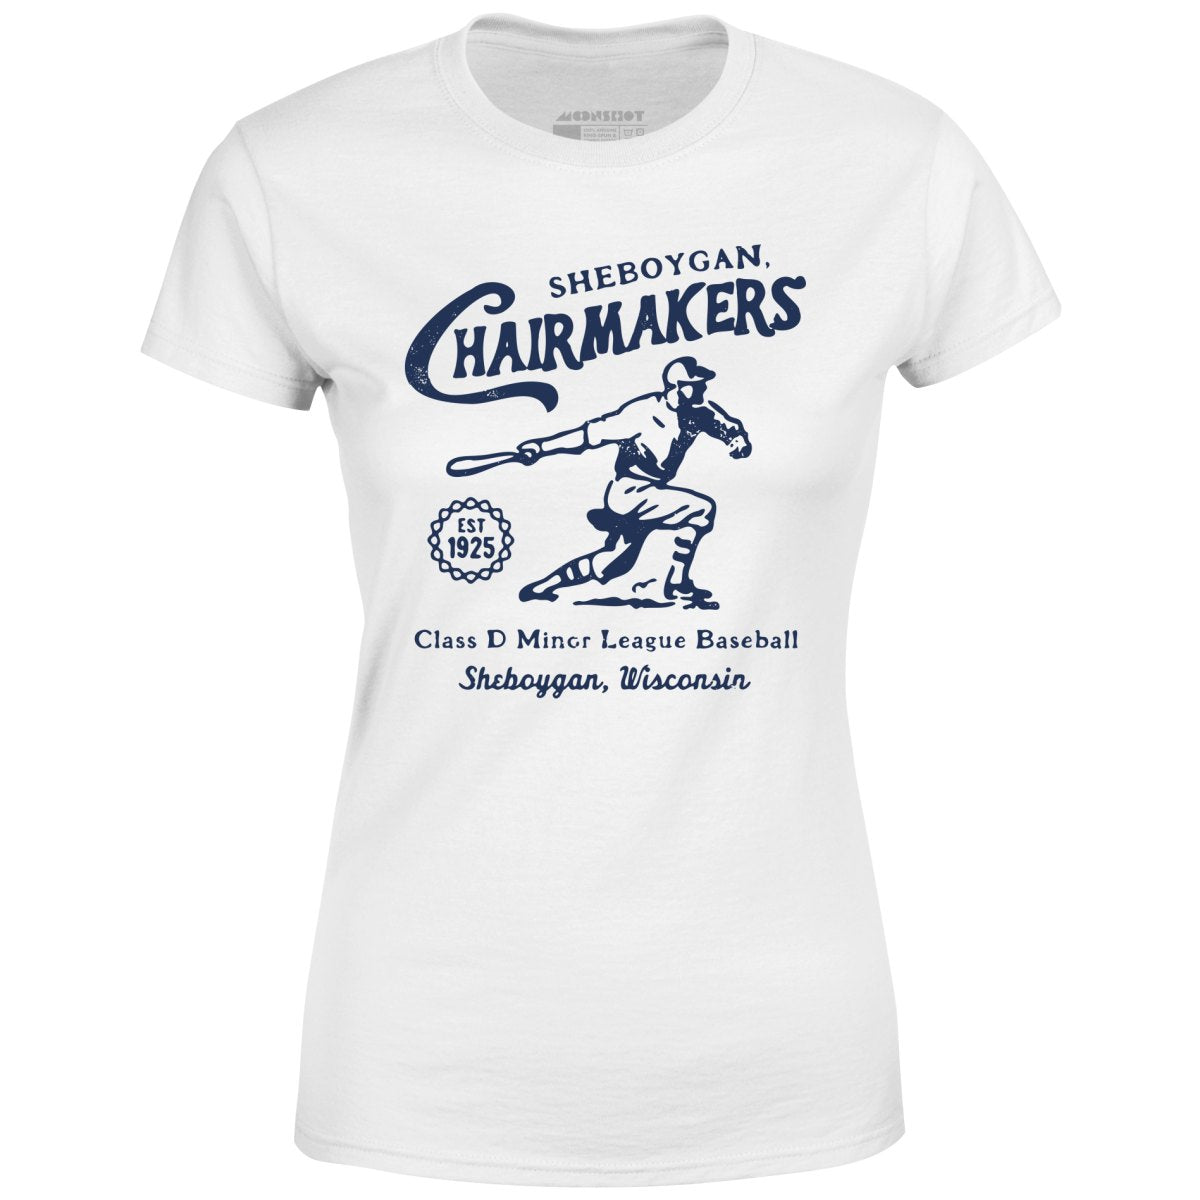 Sheboygan Chairmakers - Wisconsin - Vintage Defunct Baseball Teams - Women's T-Shirt